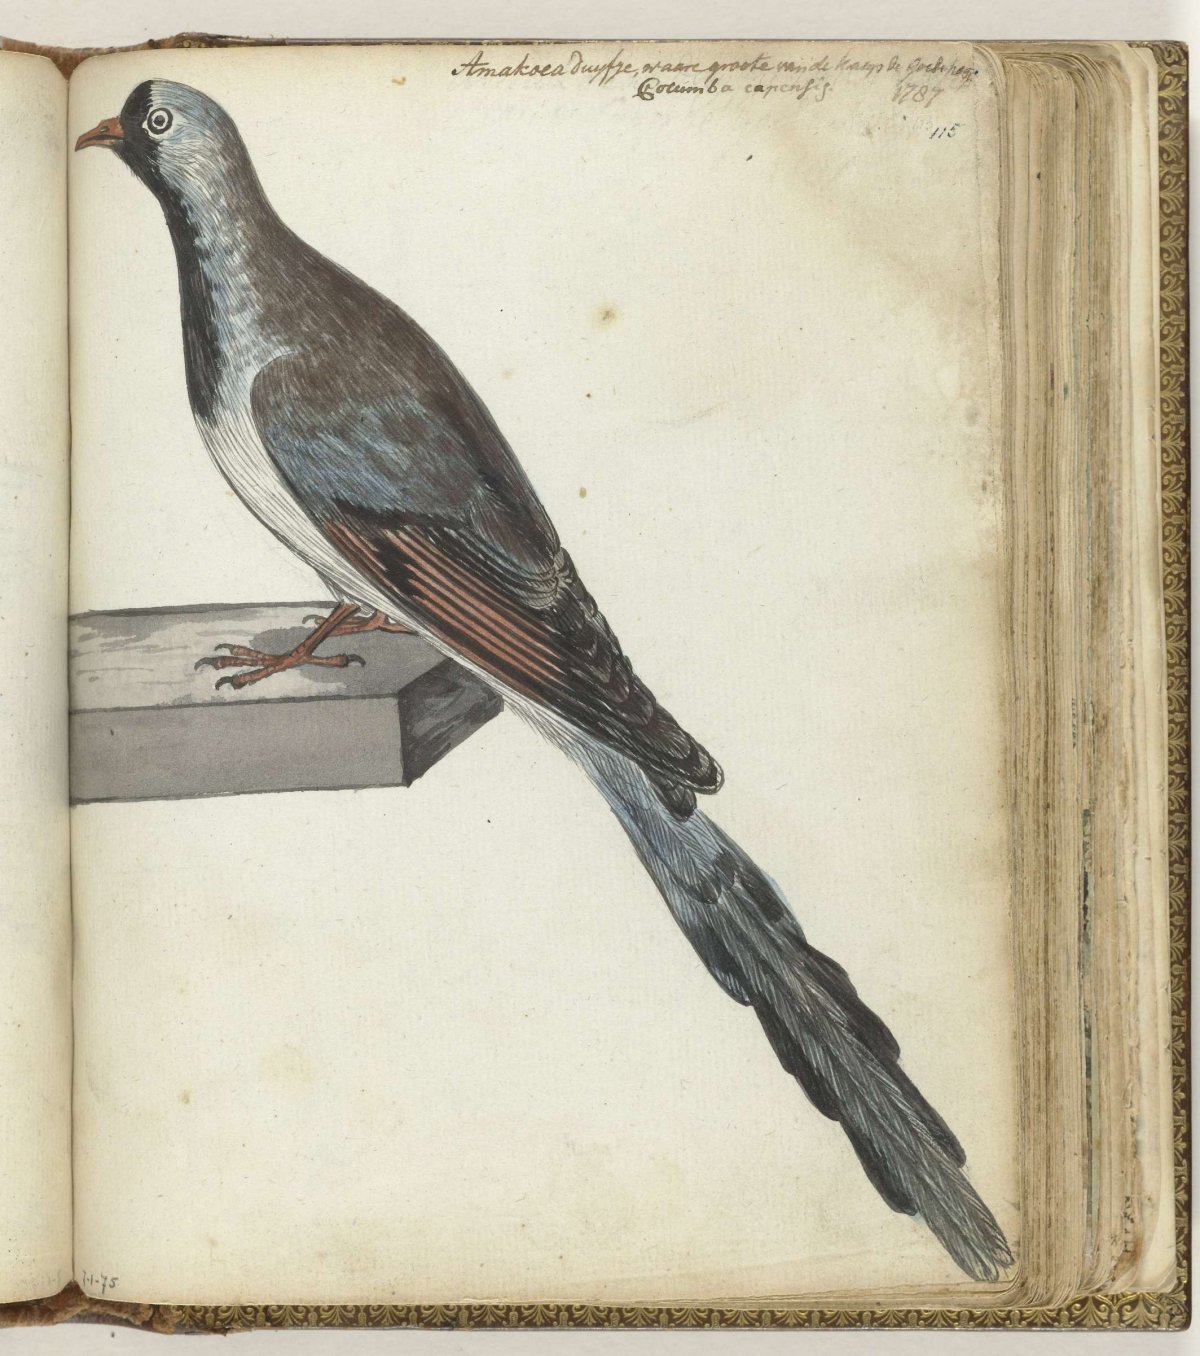 Kaapse duif, Jan Brandes, 1787